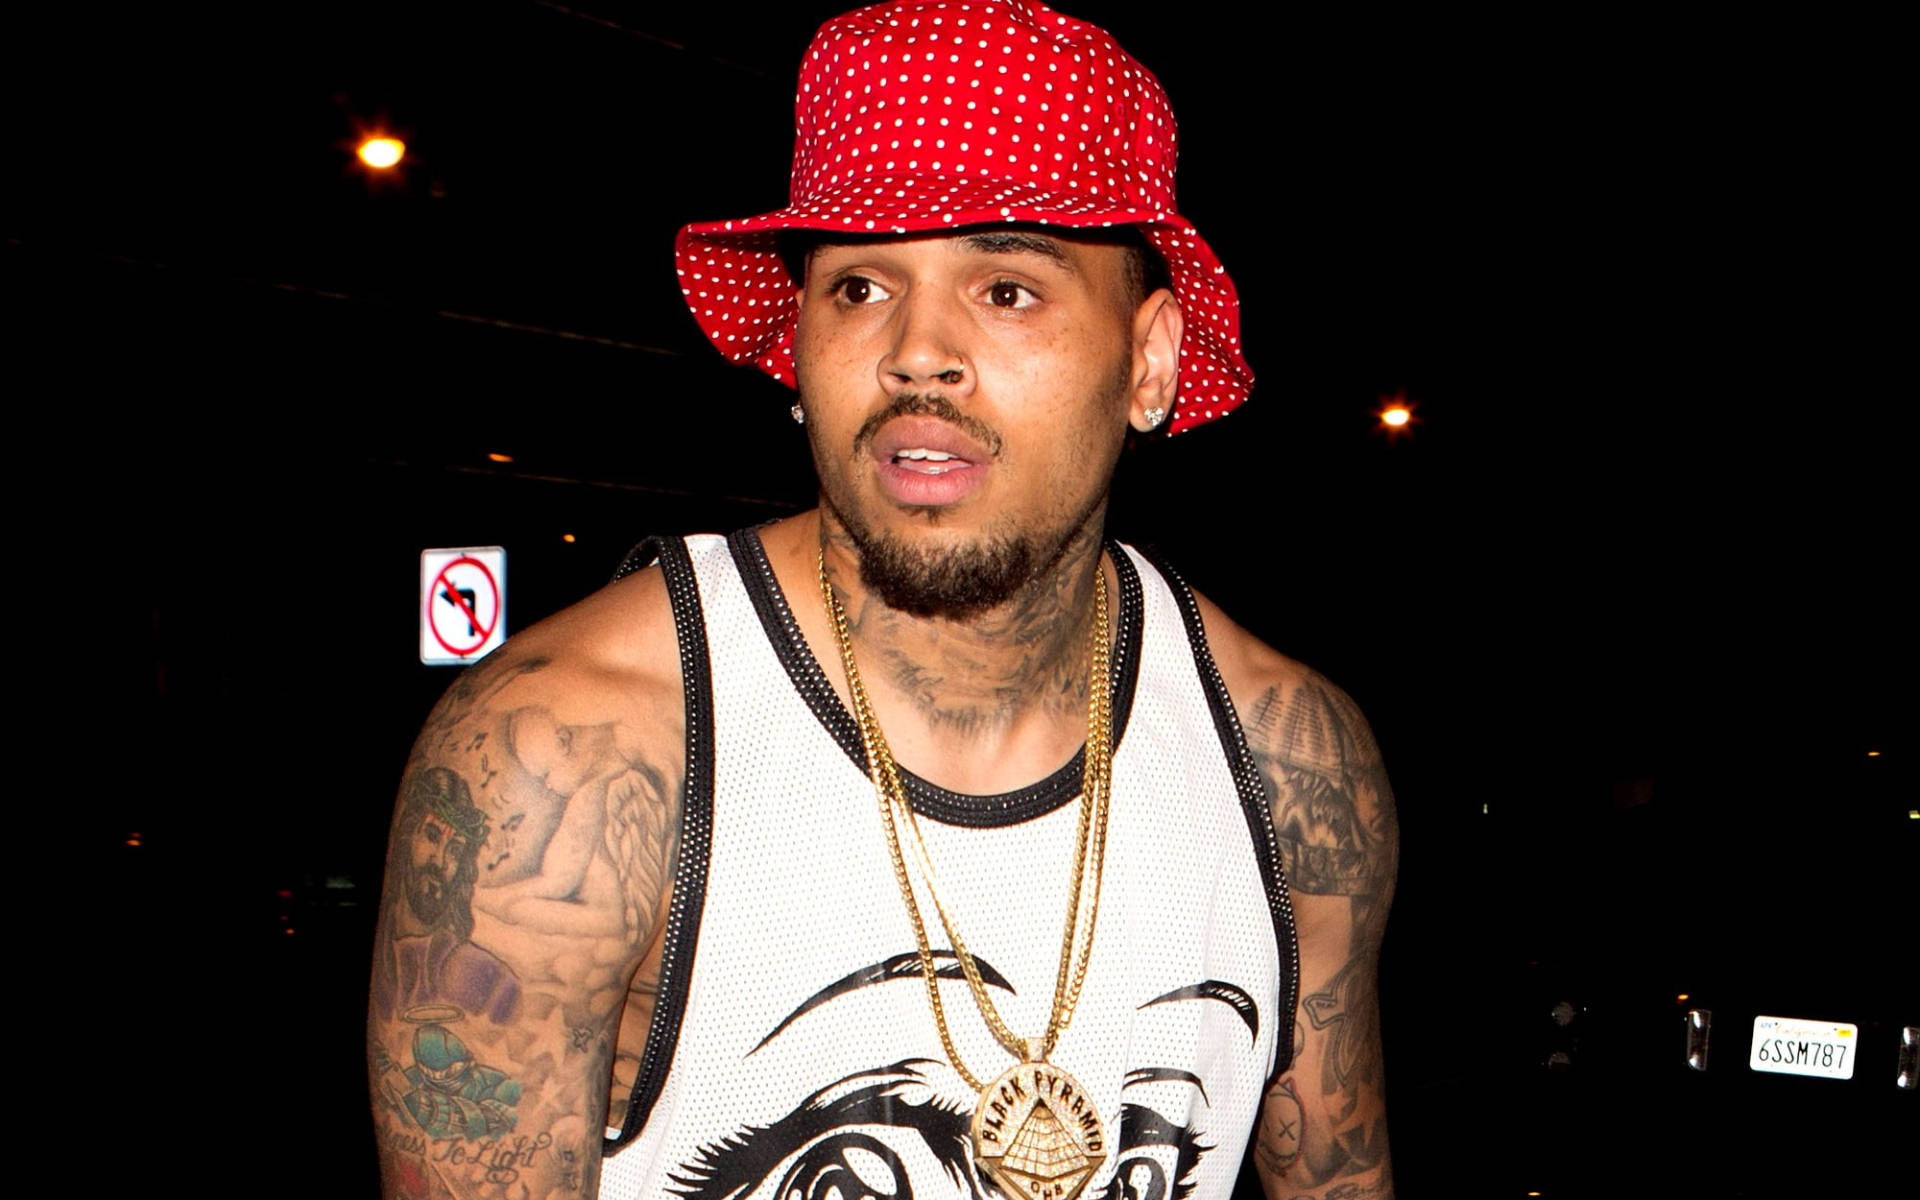 Chris Brown Polka Dot Red Hat Background